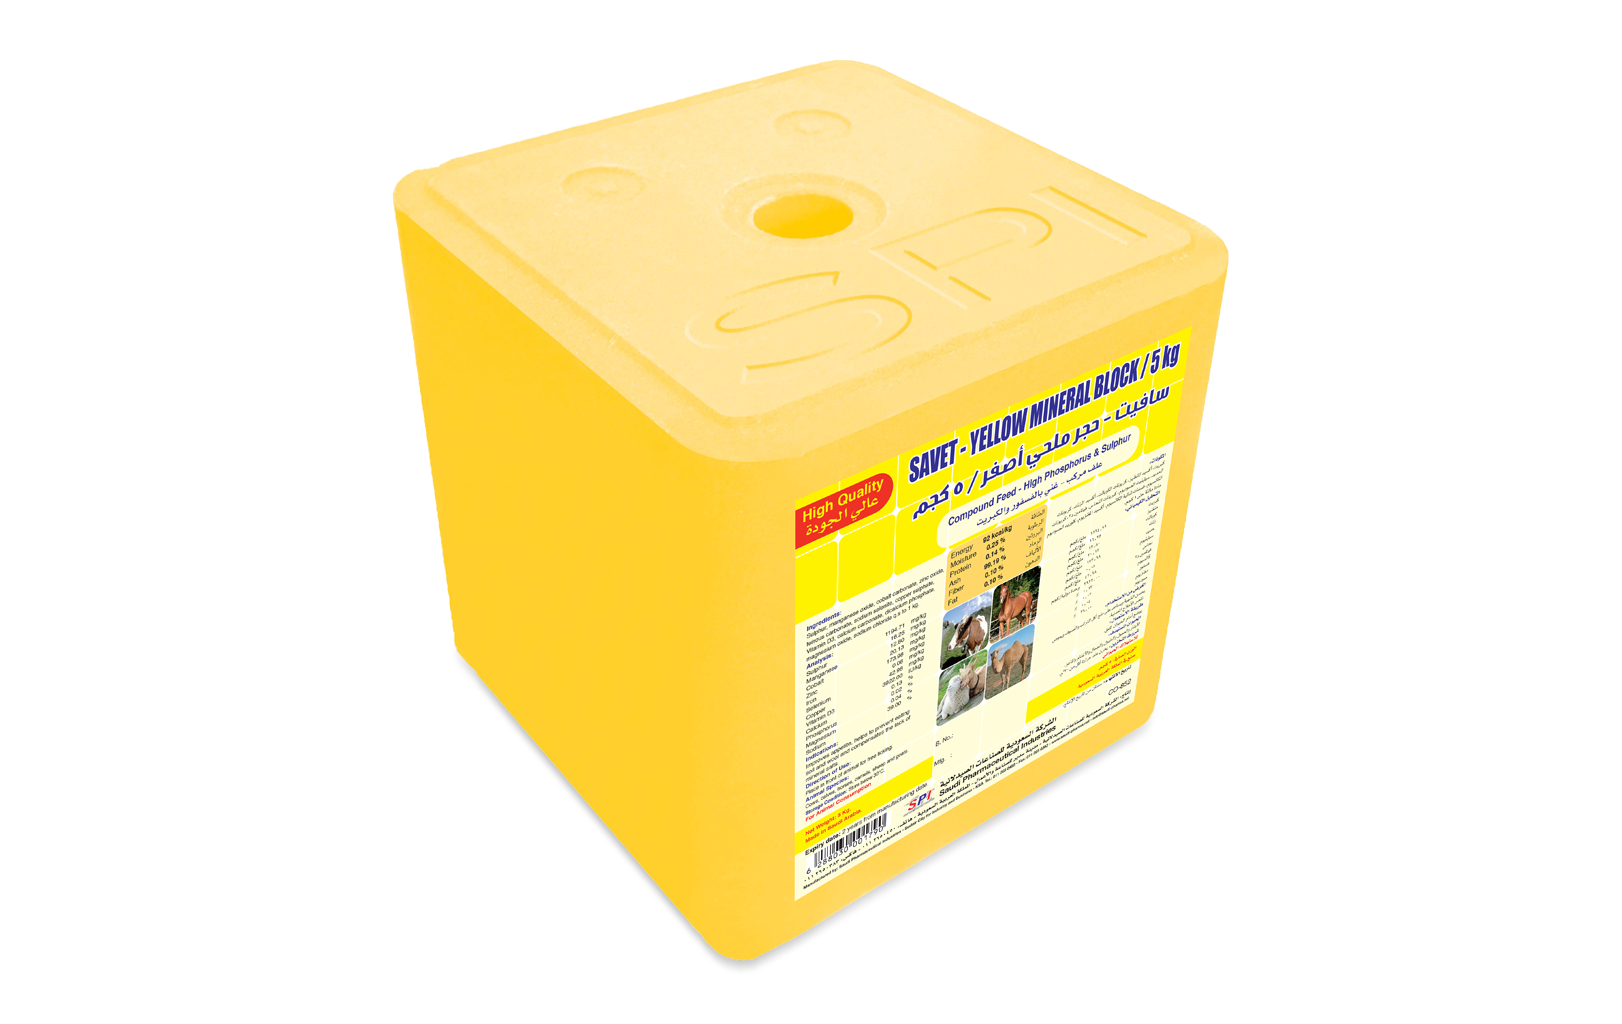 Savet-Yellow mineral block 5KG